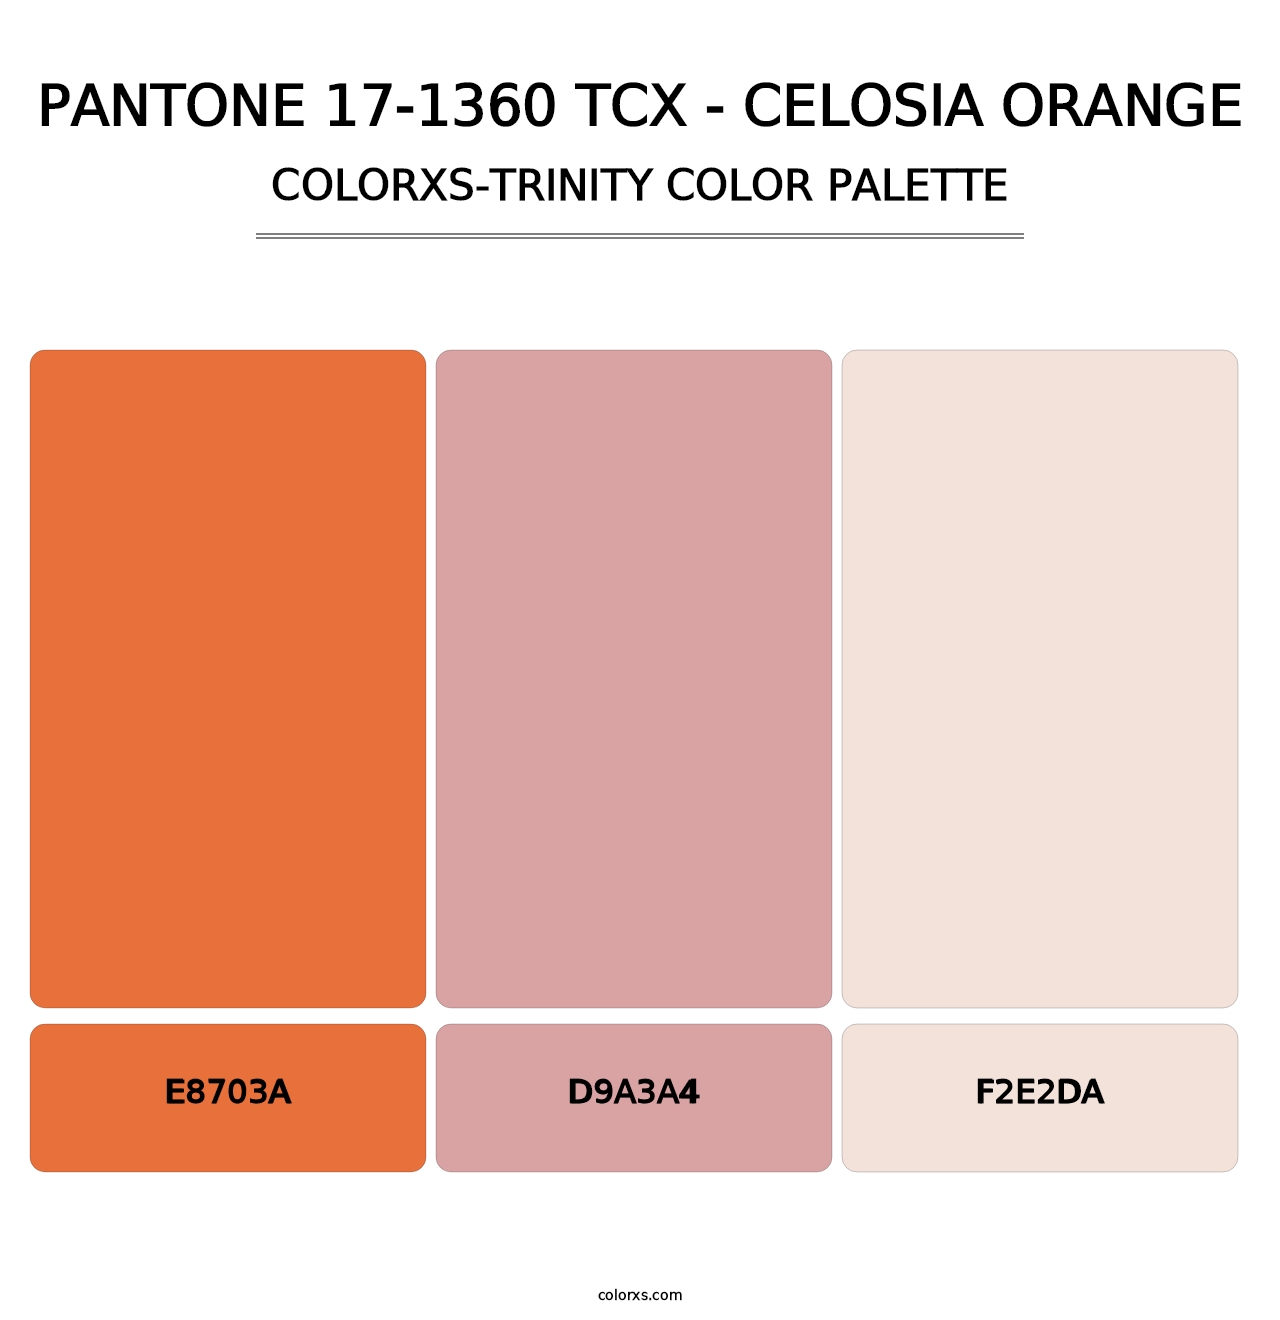 PANTONE 17-1360 TCX - Celosia Orange - Colorxs Trinity Palette